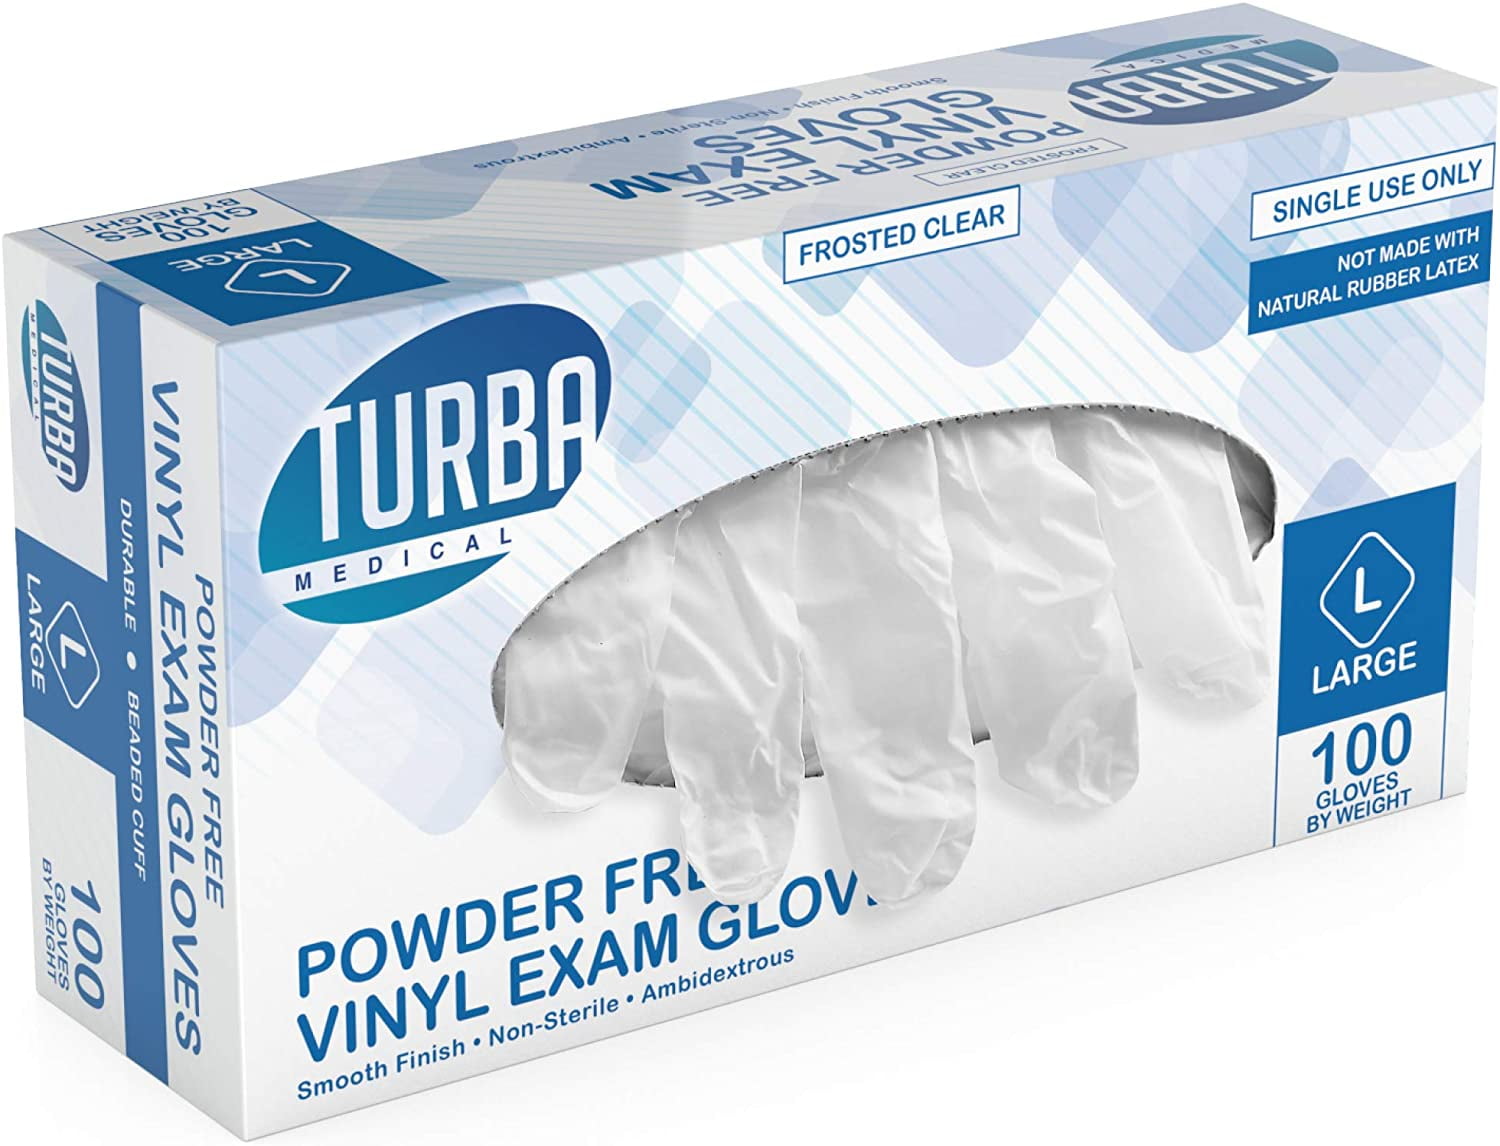 100 Pcs/1 Box Durable Latex Cleaning Powder Free Gloves SMALL MEDIUM S-M 